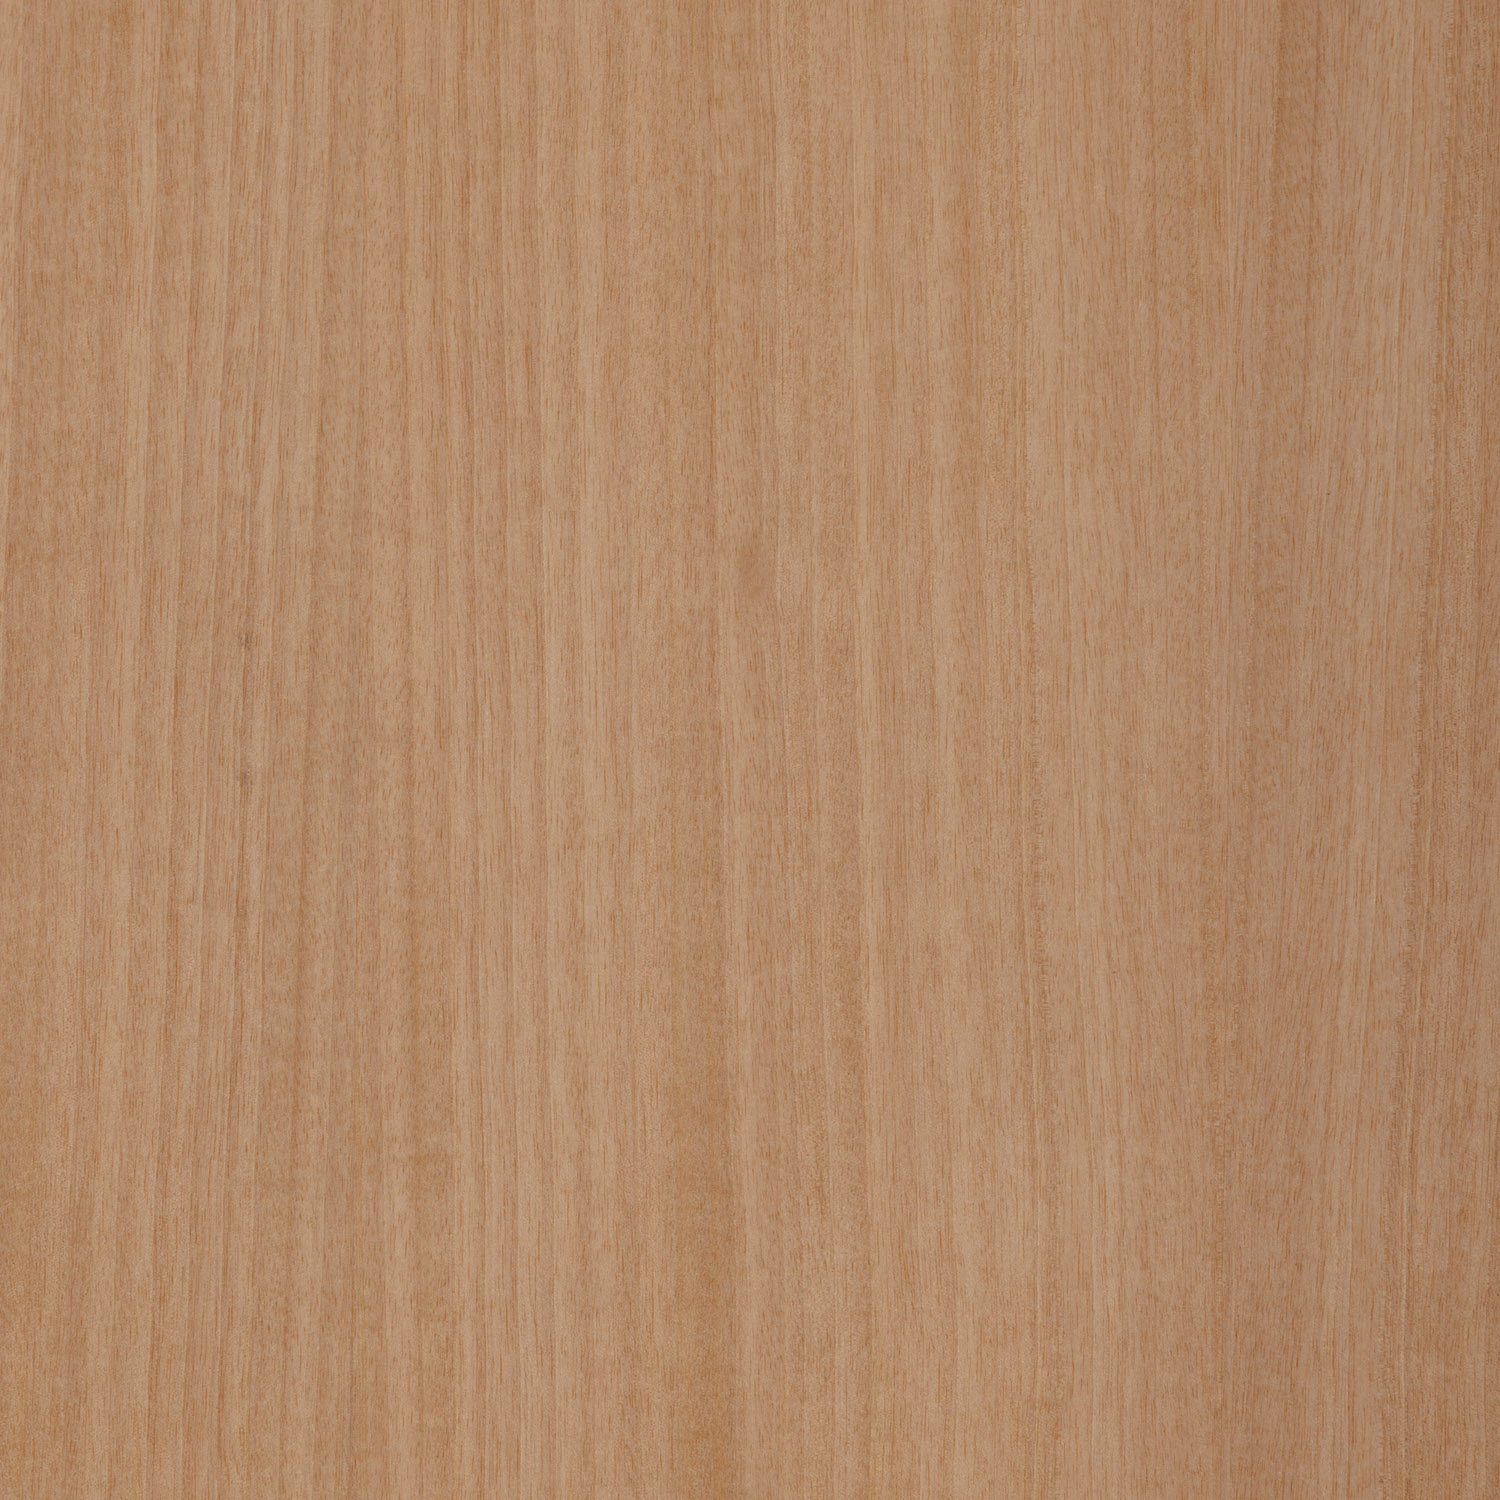 anigre natural wood veneer panel